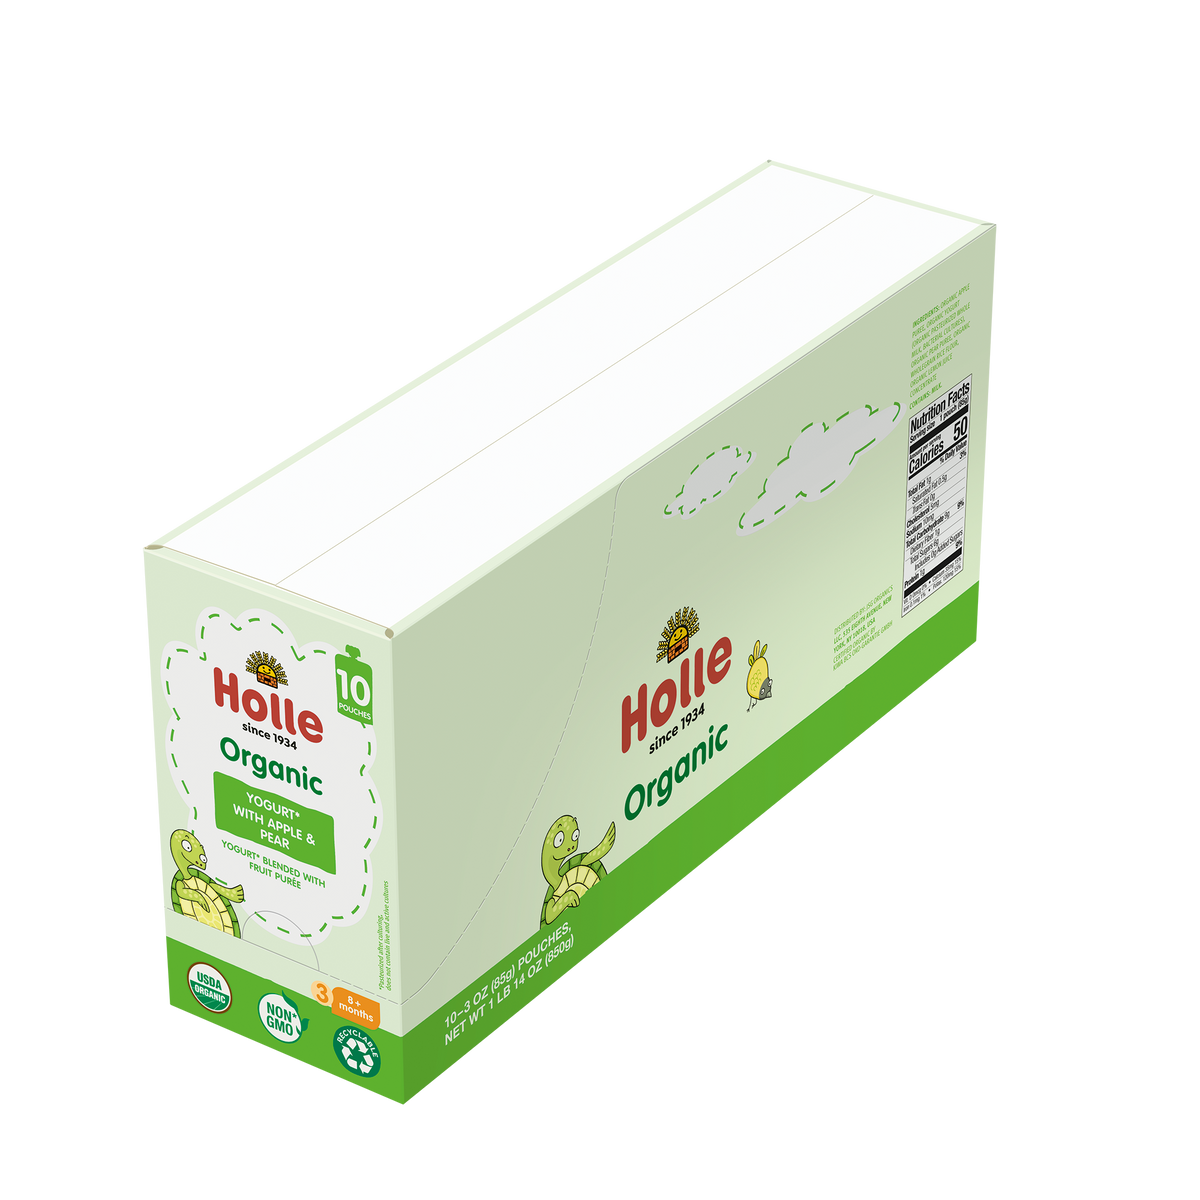 Holle Organic Yogurt Pouches - Apple &amp; Pear